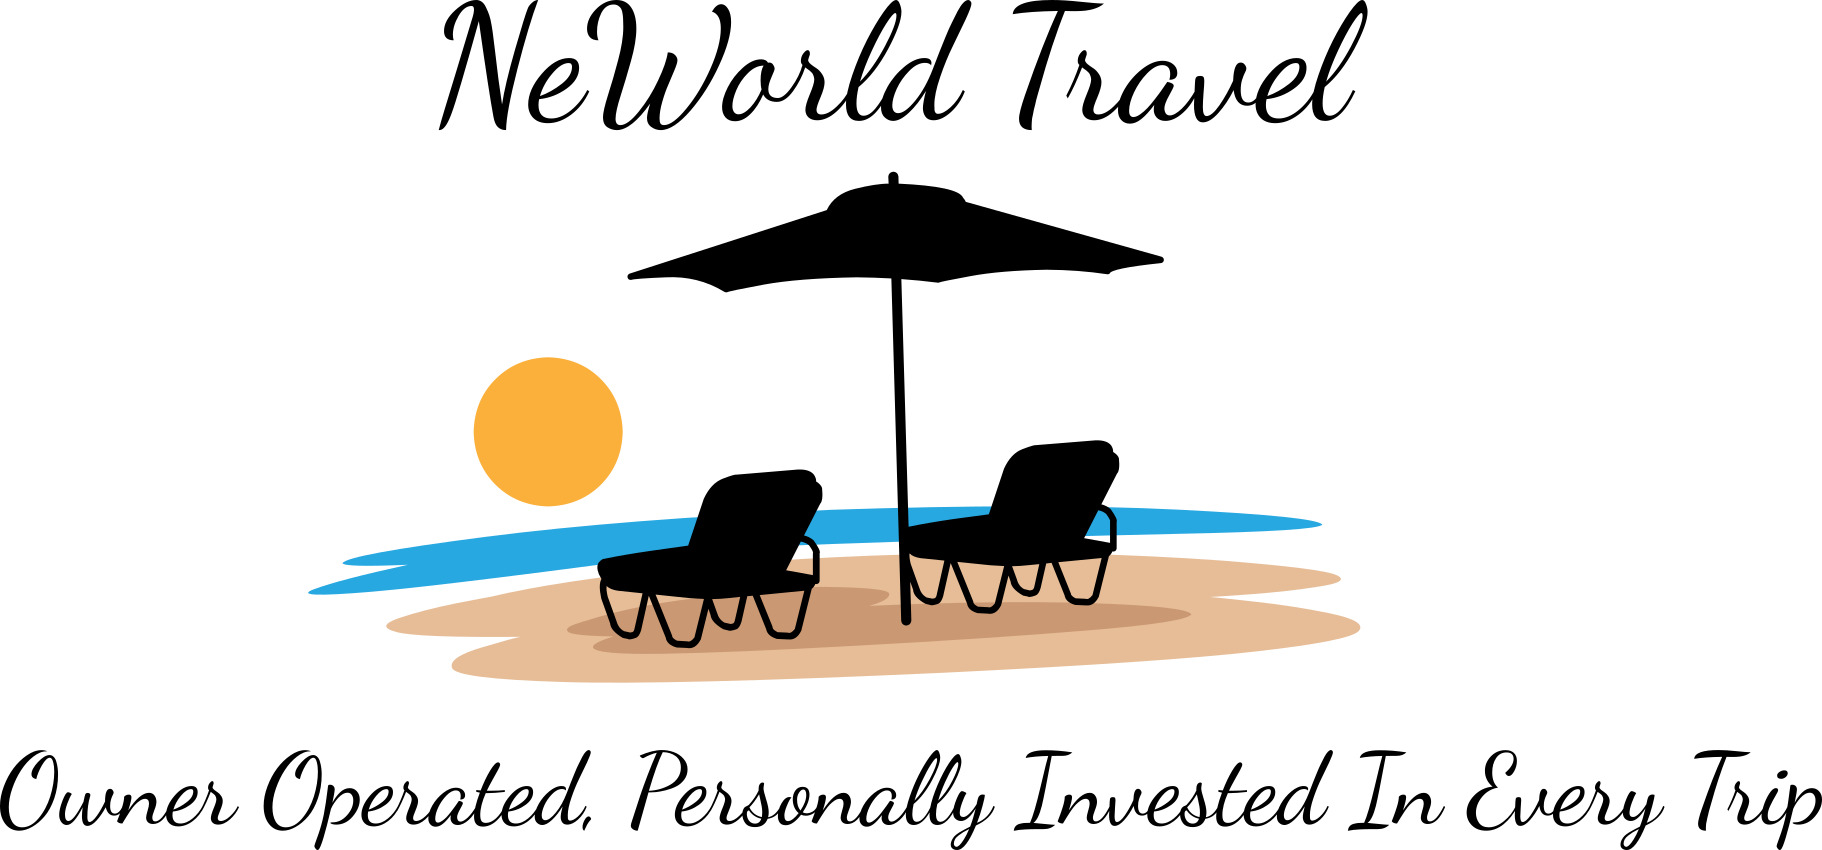 NeWorld Travel